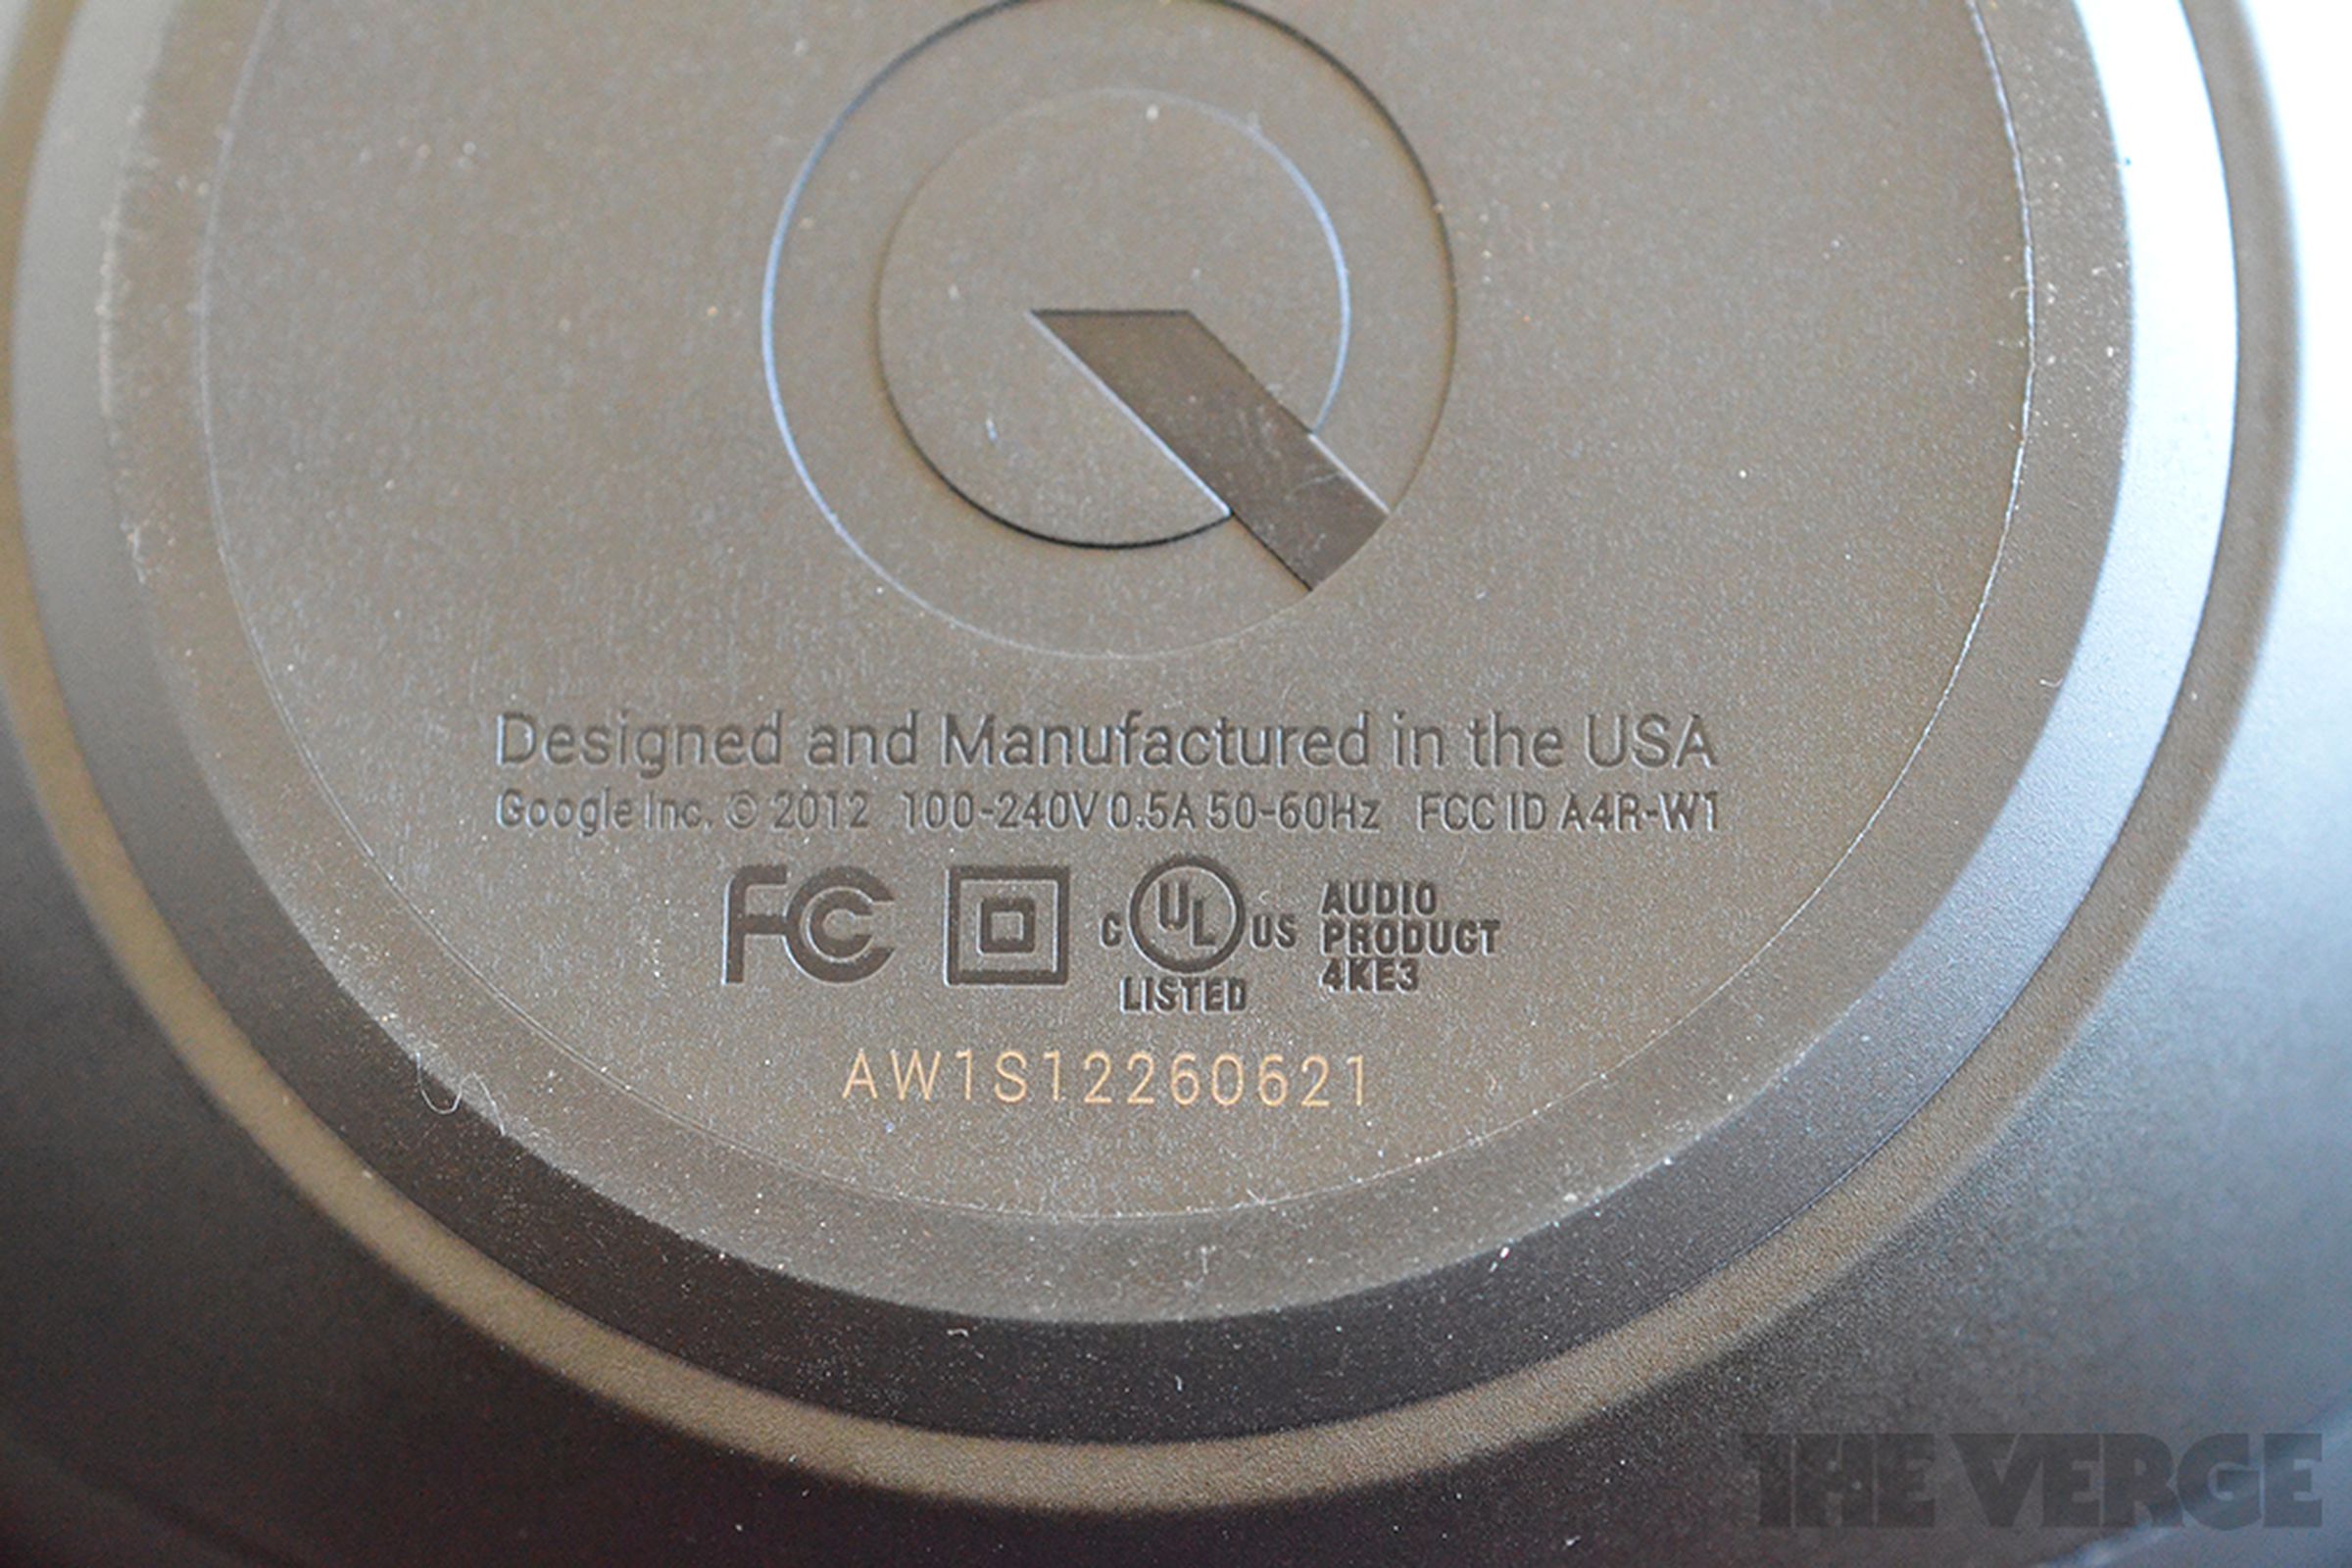 Google Nexus Q made in USA